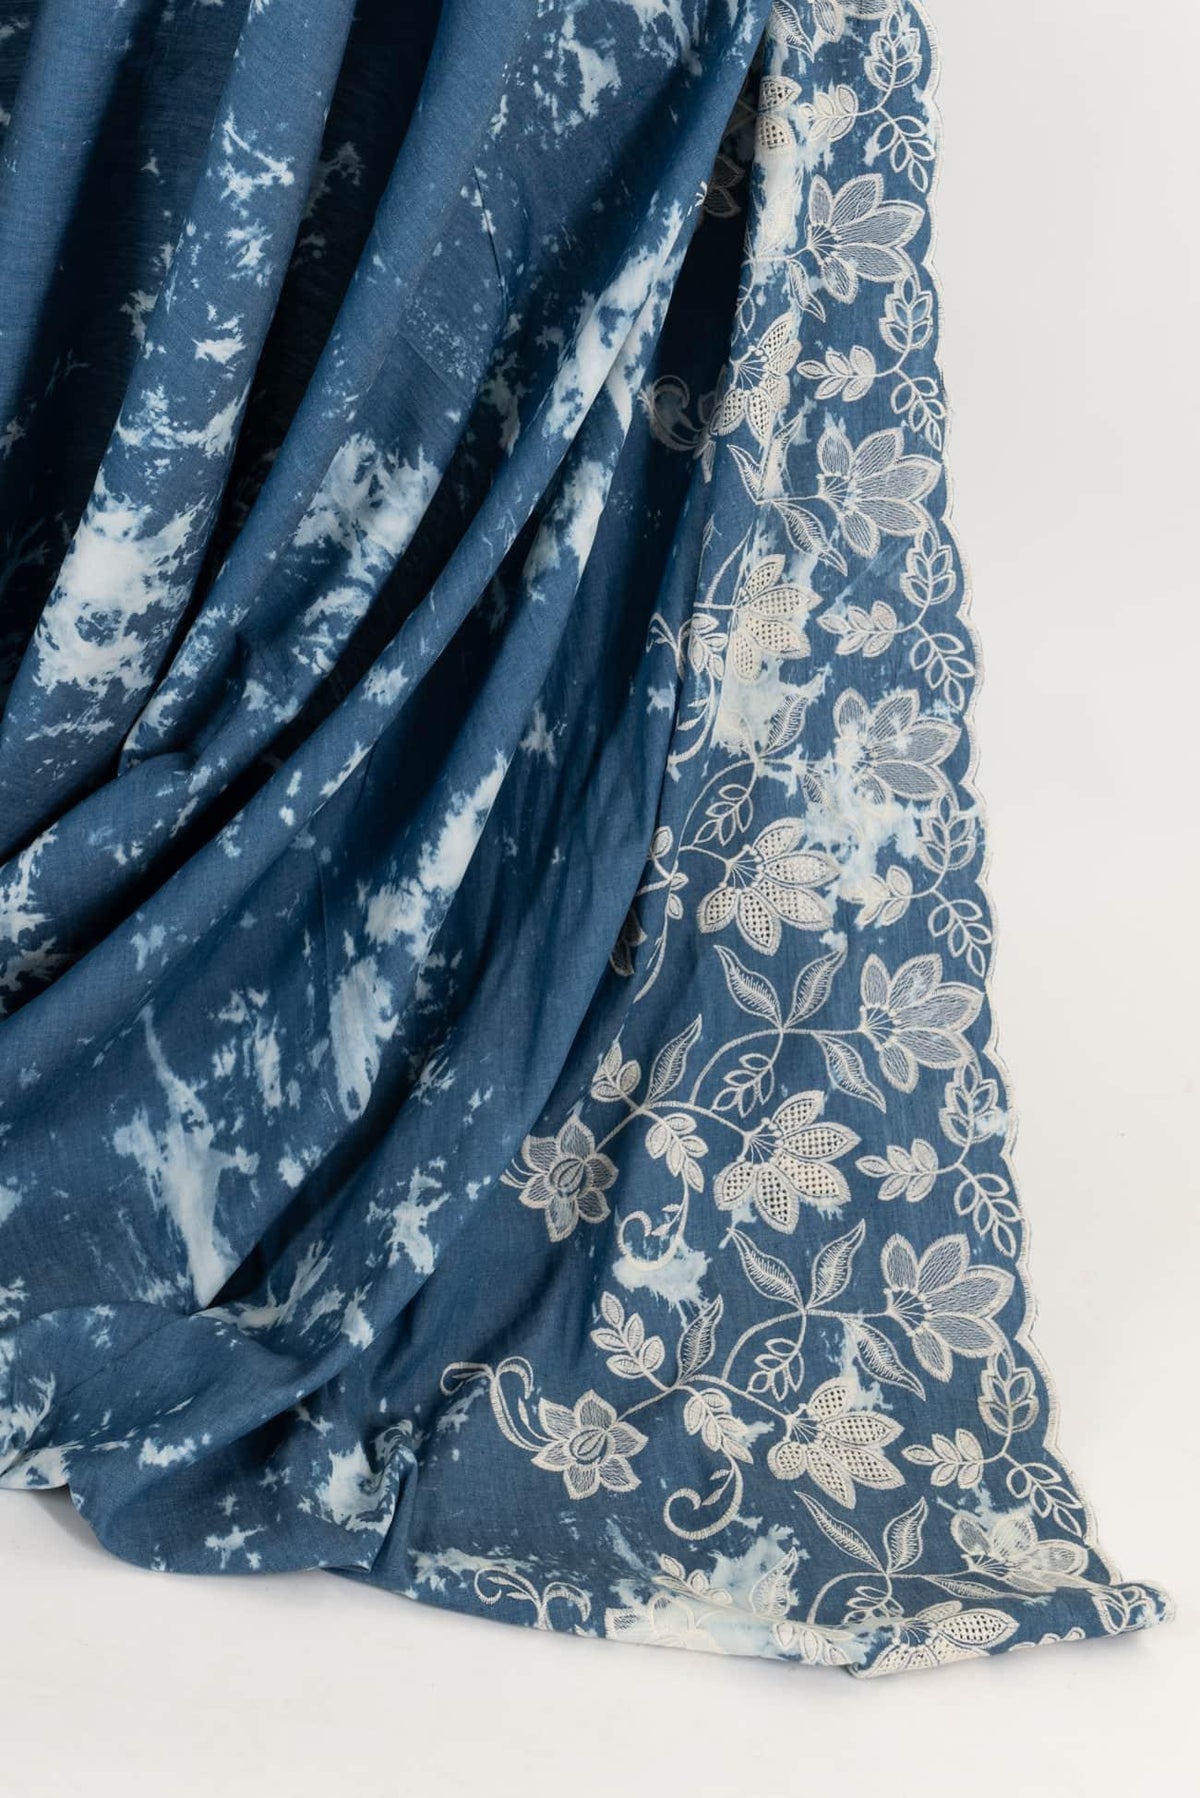 Skyland Shibori Embroidered Cotton Woven - Marcy Tilton Fabrics